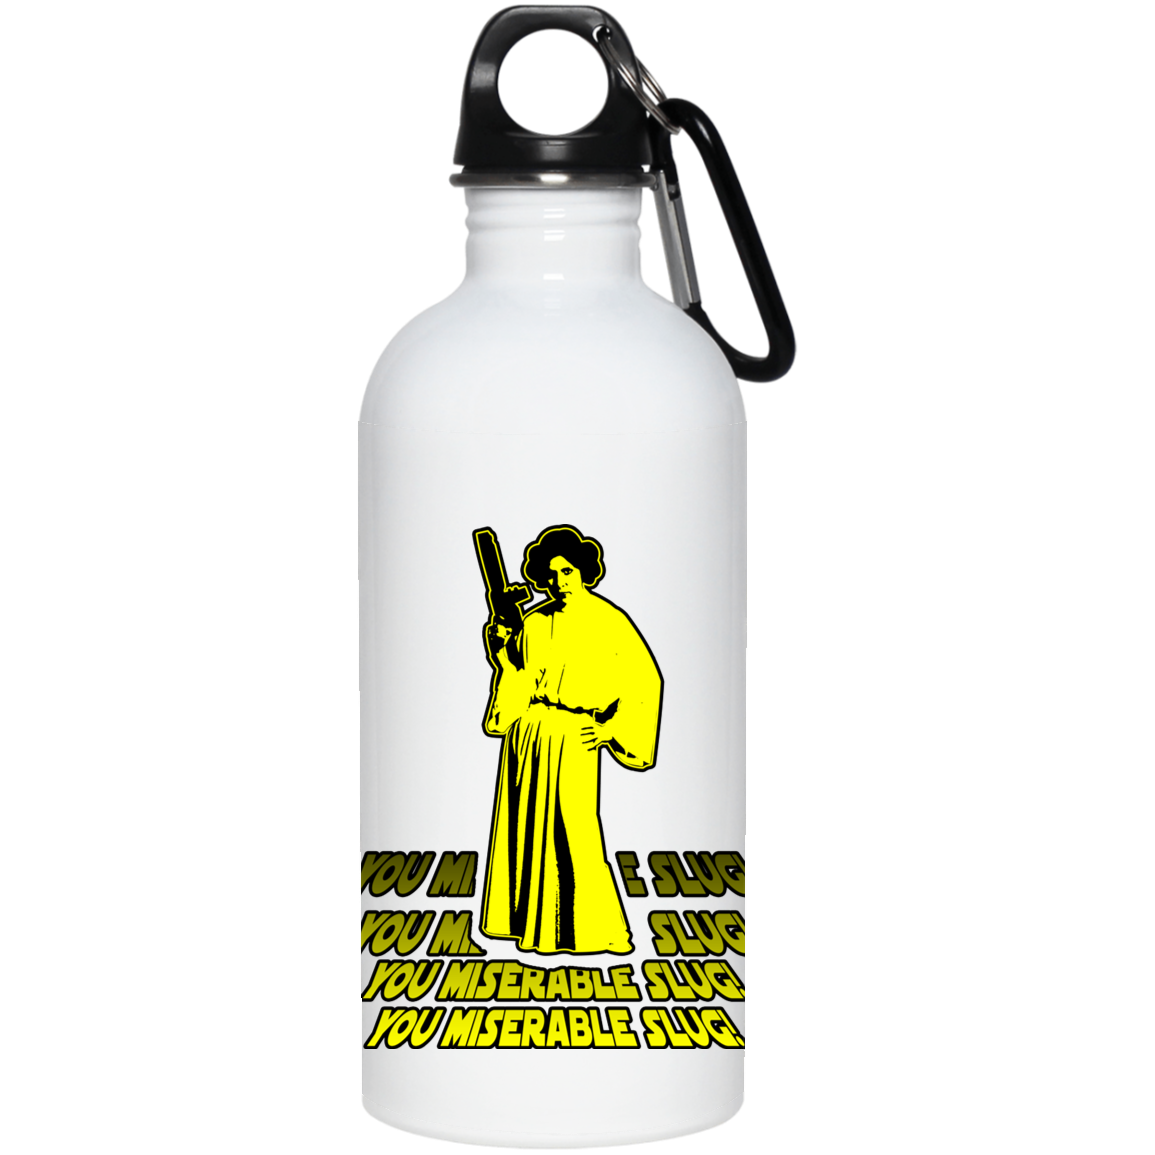 ArtichokeUSA Custom Design. You Miserable Slug. Carrie Fisher Tribute. Star Wars / Blues Brothers Fan Art. Parody. 20 oz. Stainless Steel Water Bottle